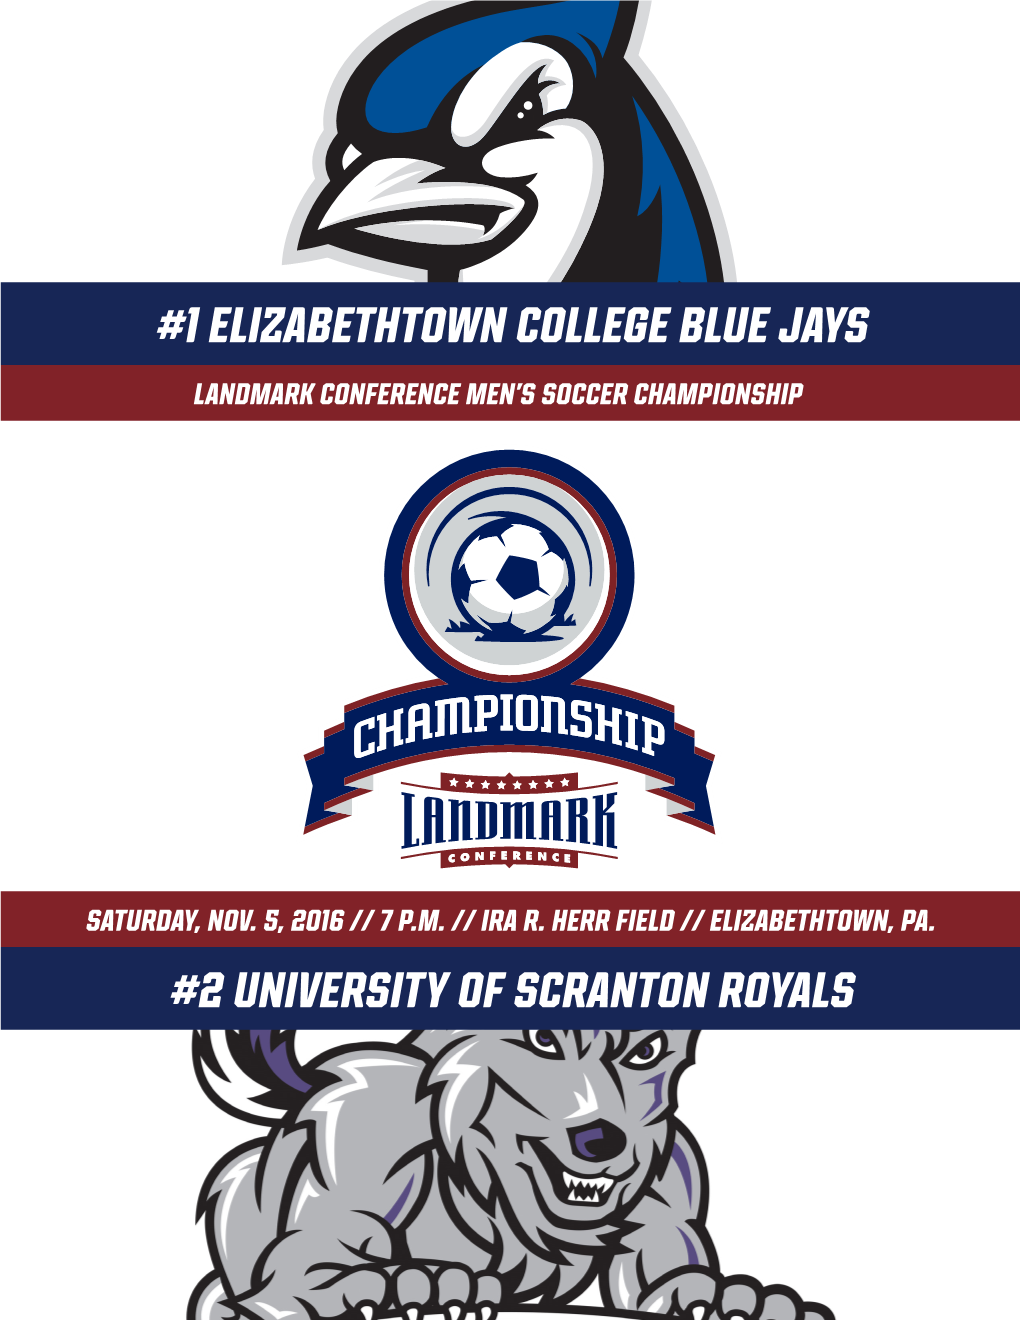 1 Elizabethtown College Blue Jays #2 University of Scranton Royals